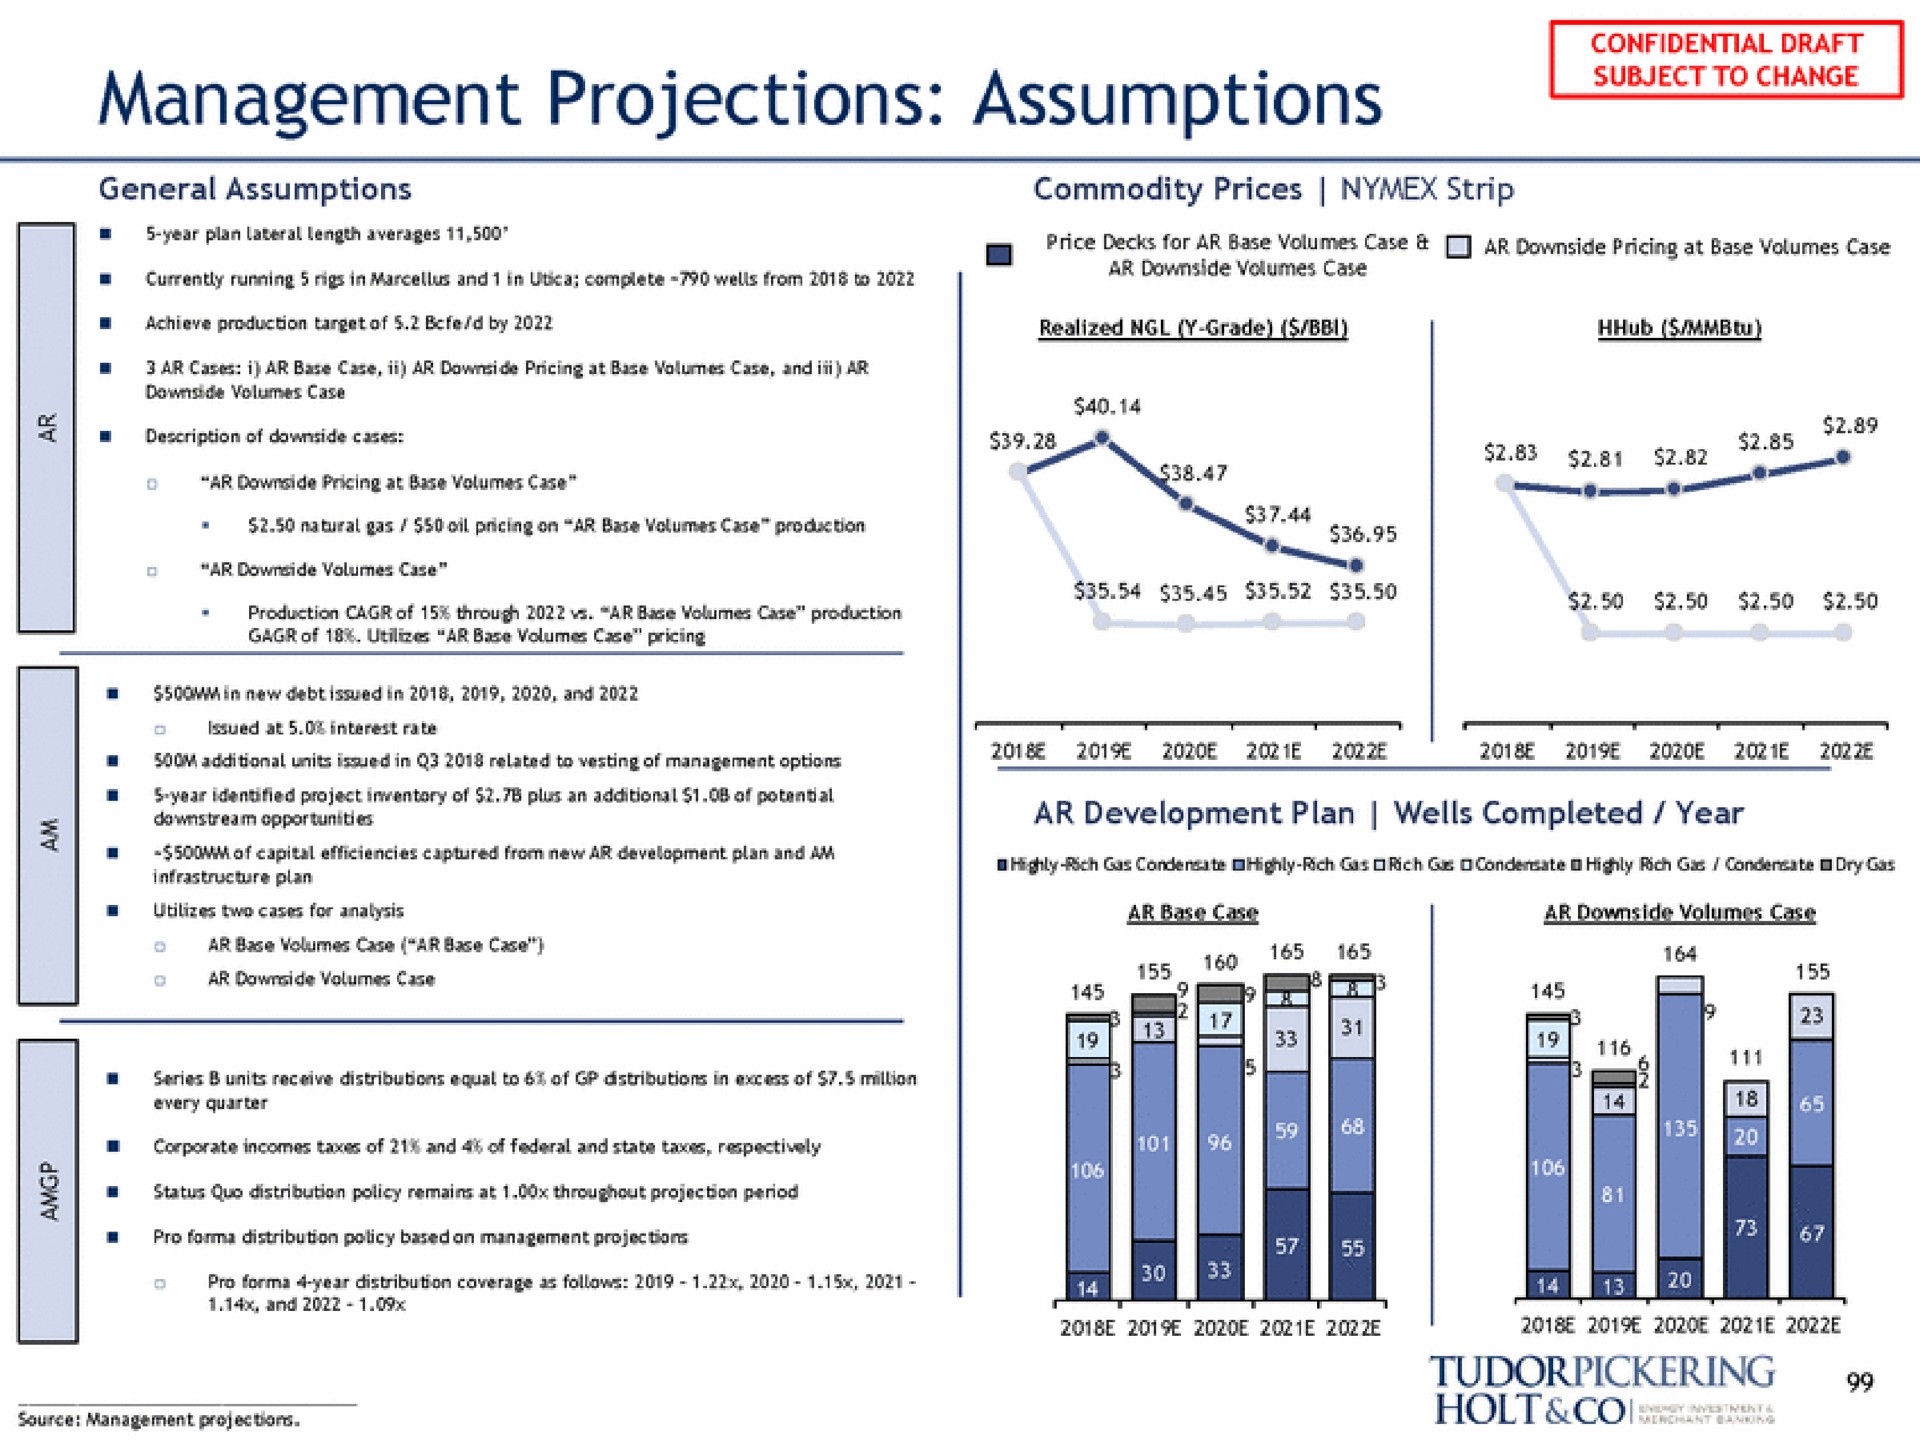 management projections assumptions holt col sees | Tudor, Pickering, Holt & Co